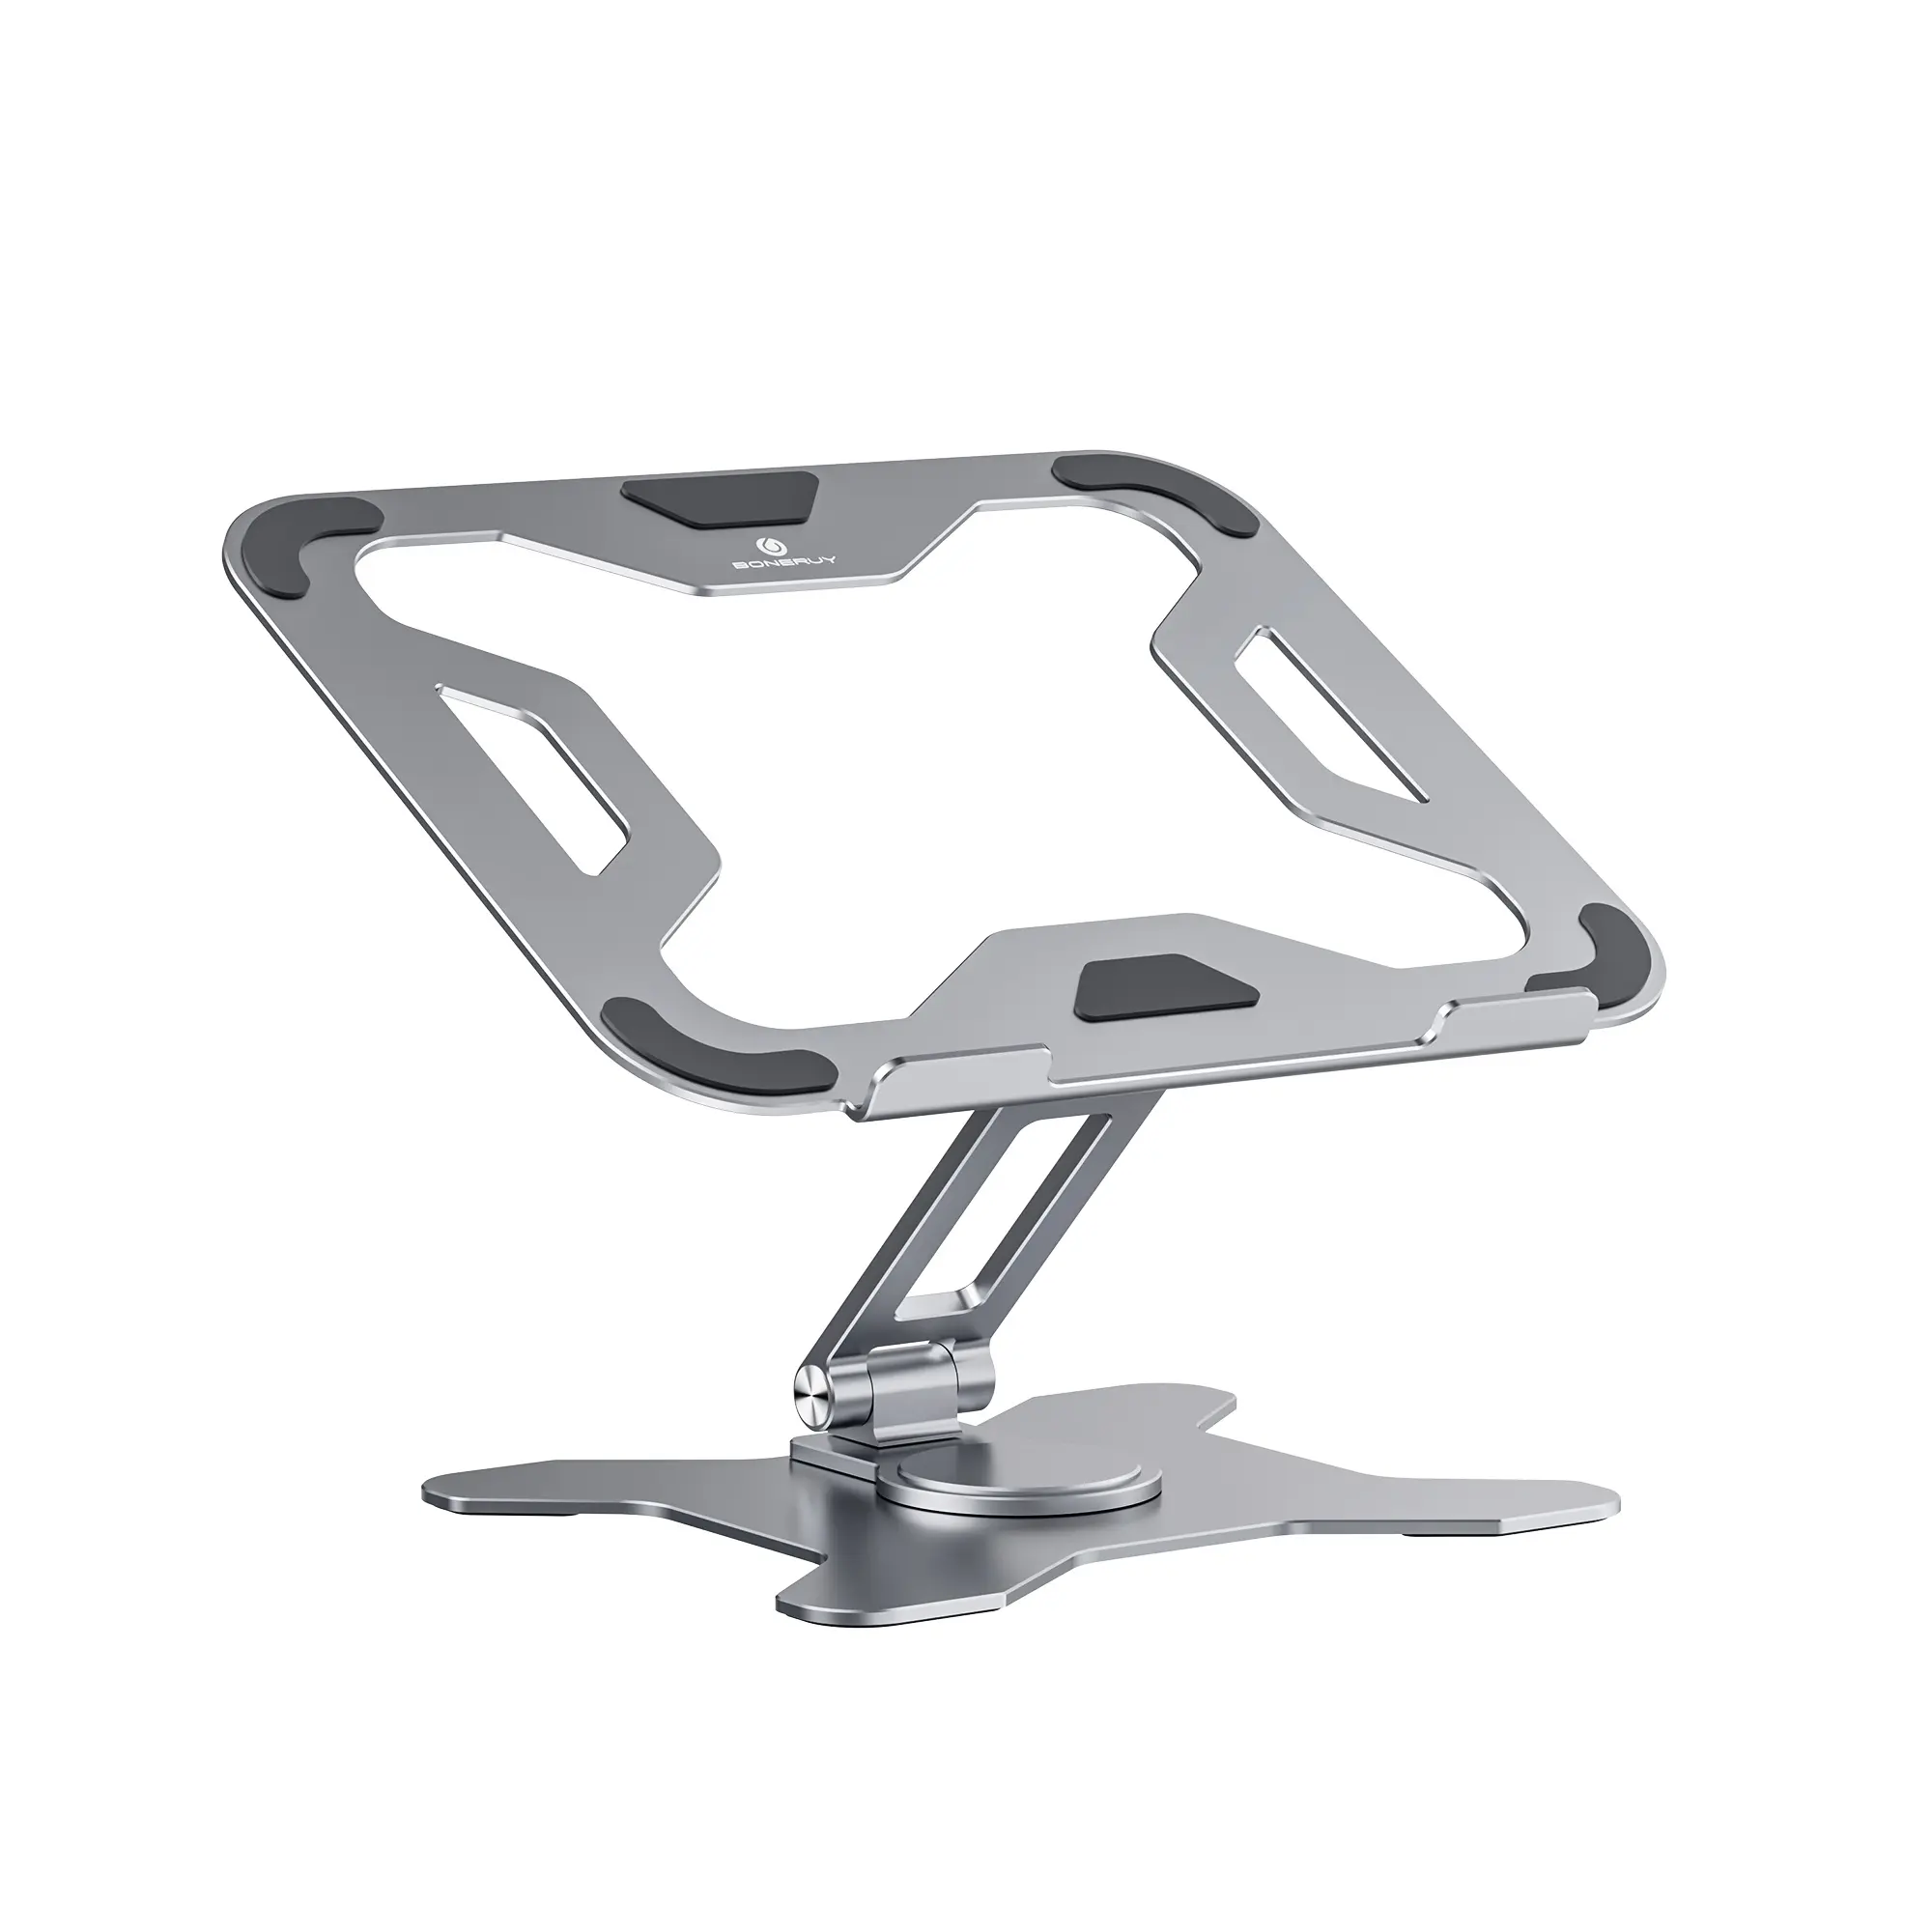 Boneruy Aluminum Alloy Foldable 360 Degree Rotatable Adjustable Laptop Stand for Desk 14~17.3 inch Inch Laptops